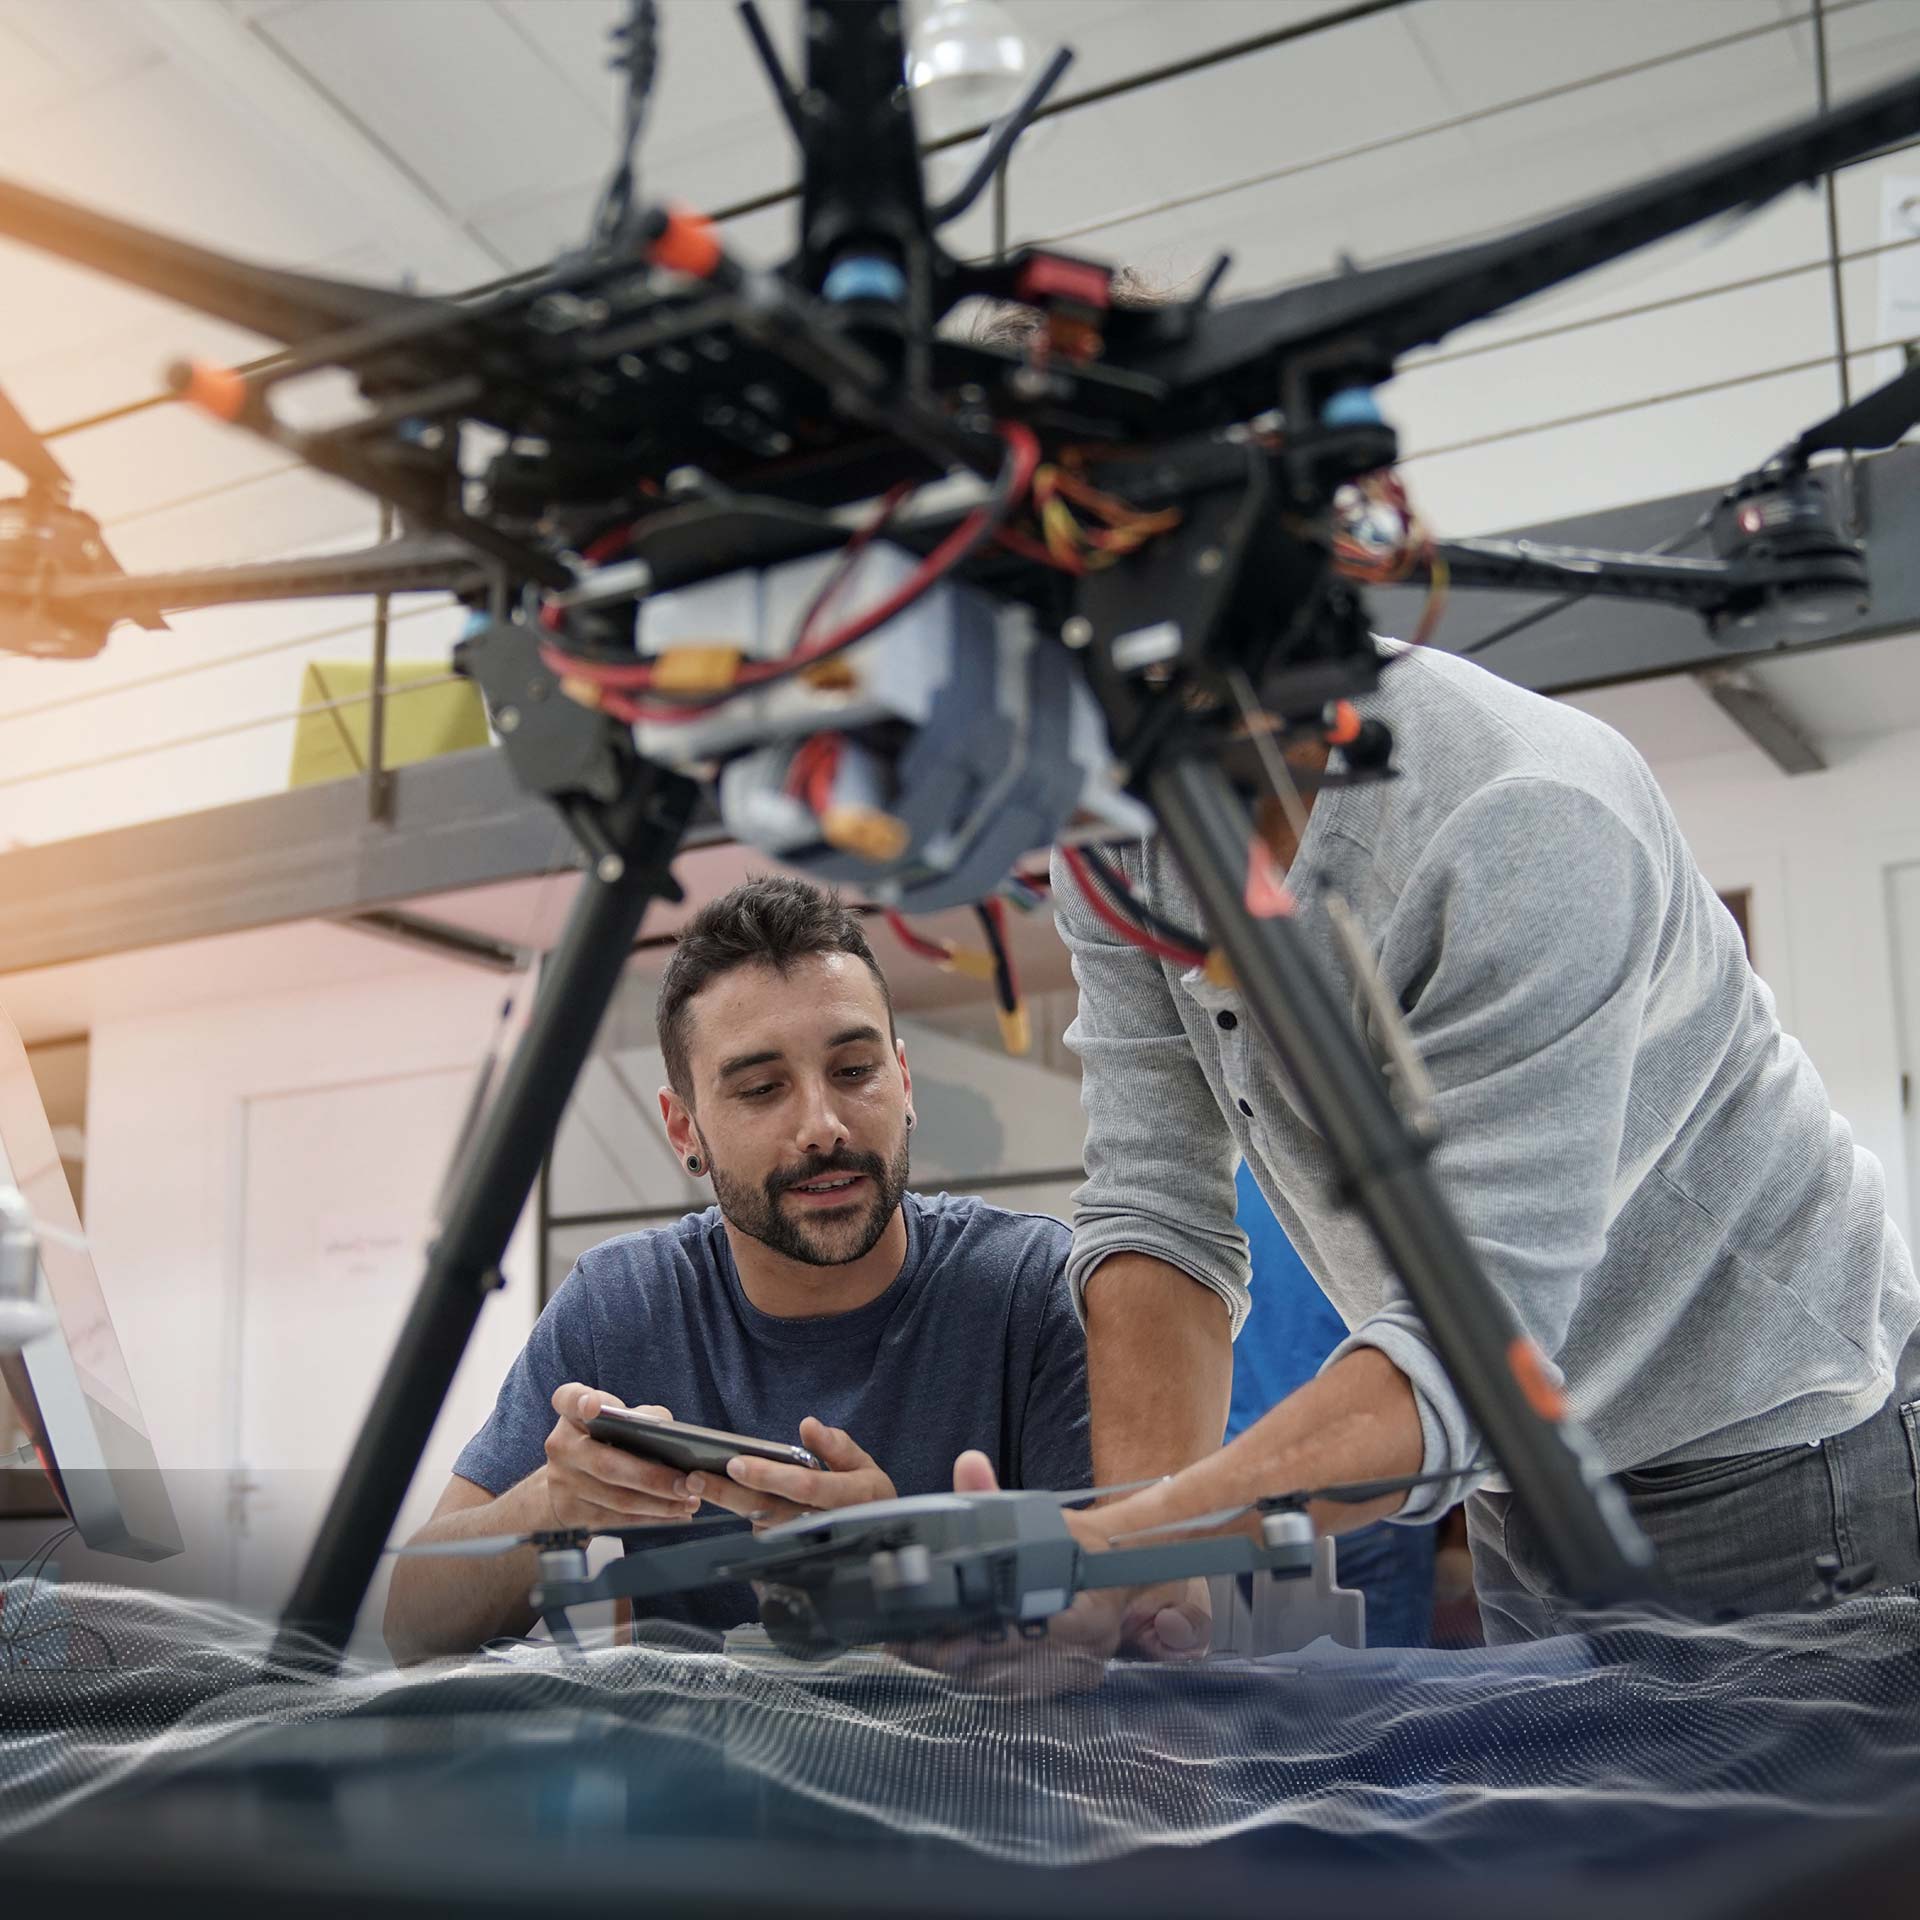 tweaking drone in high tech manufacturing lab